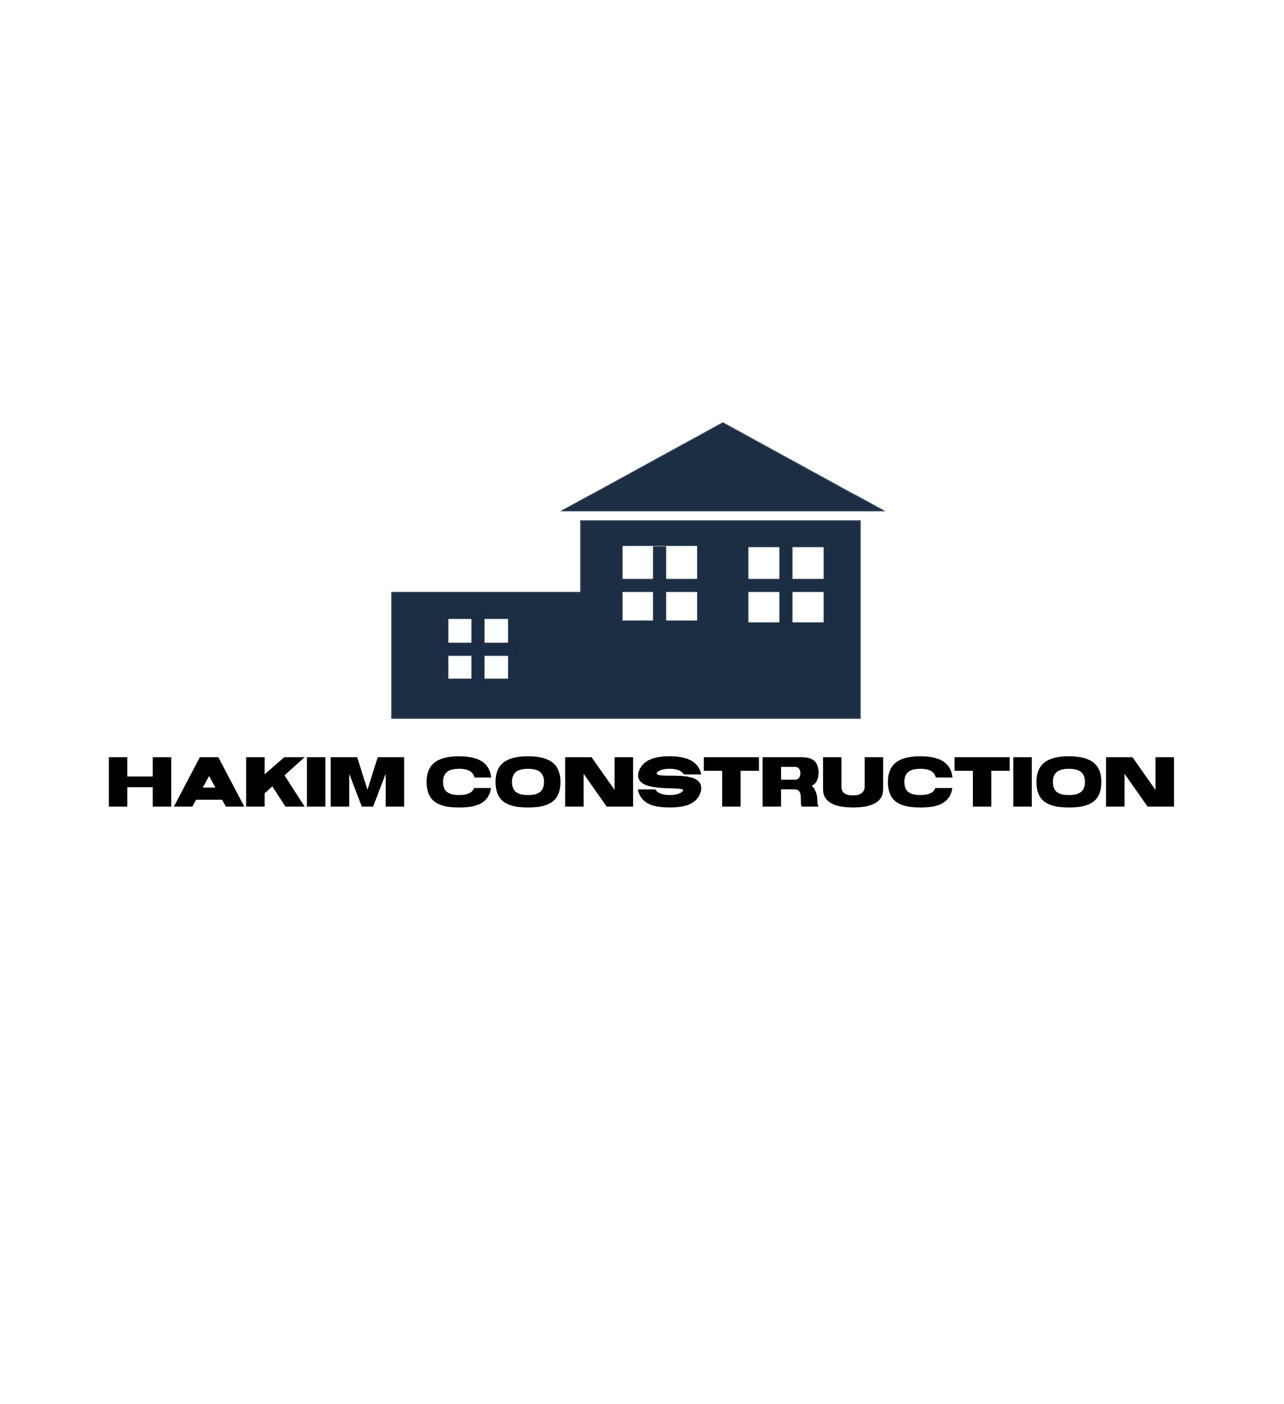 Hakim Construction's logo